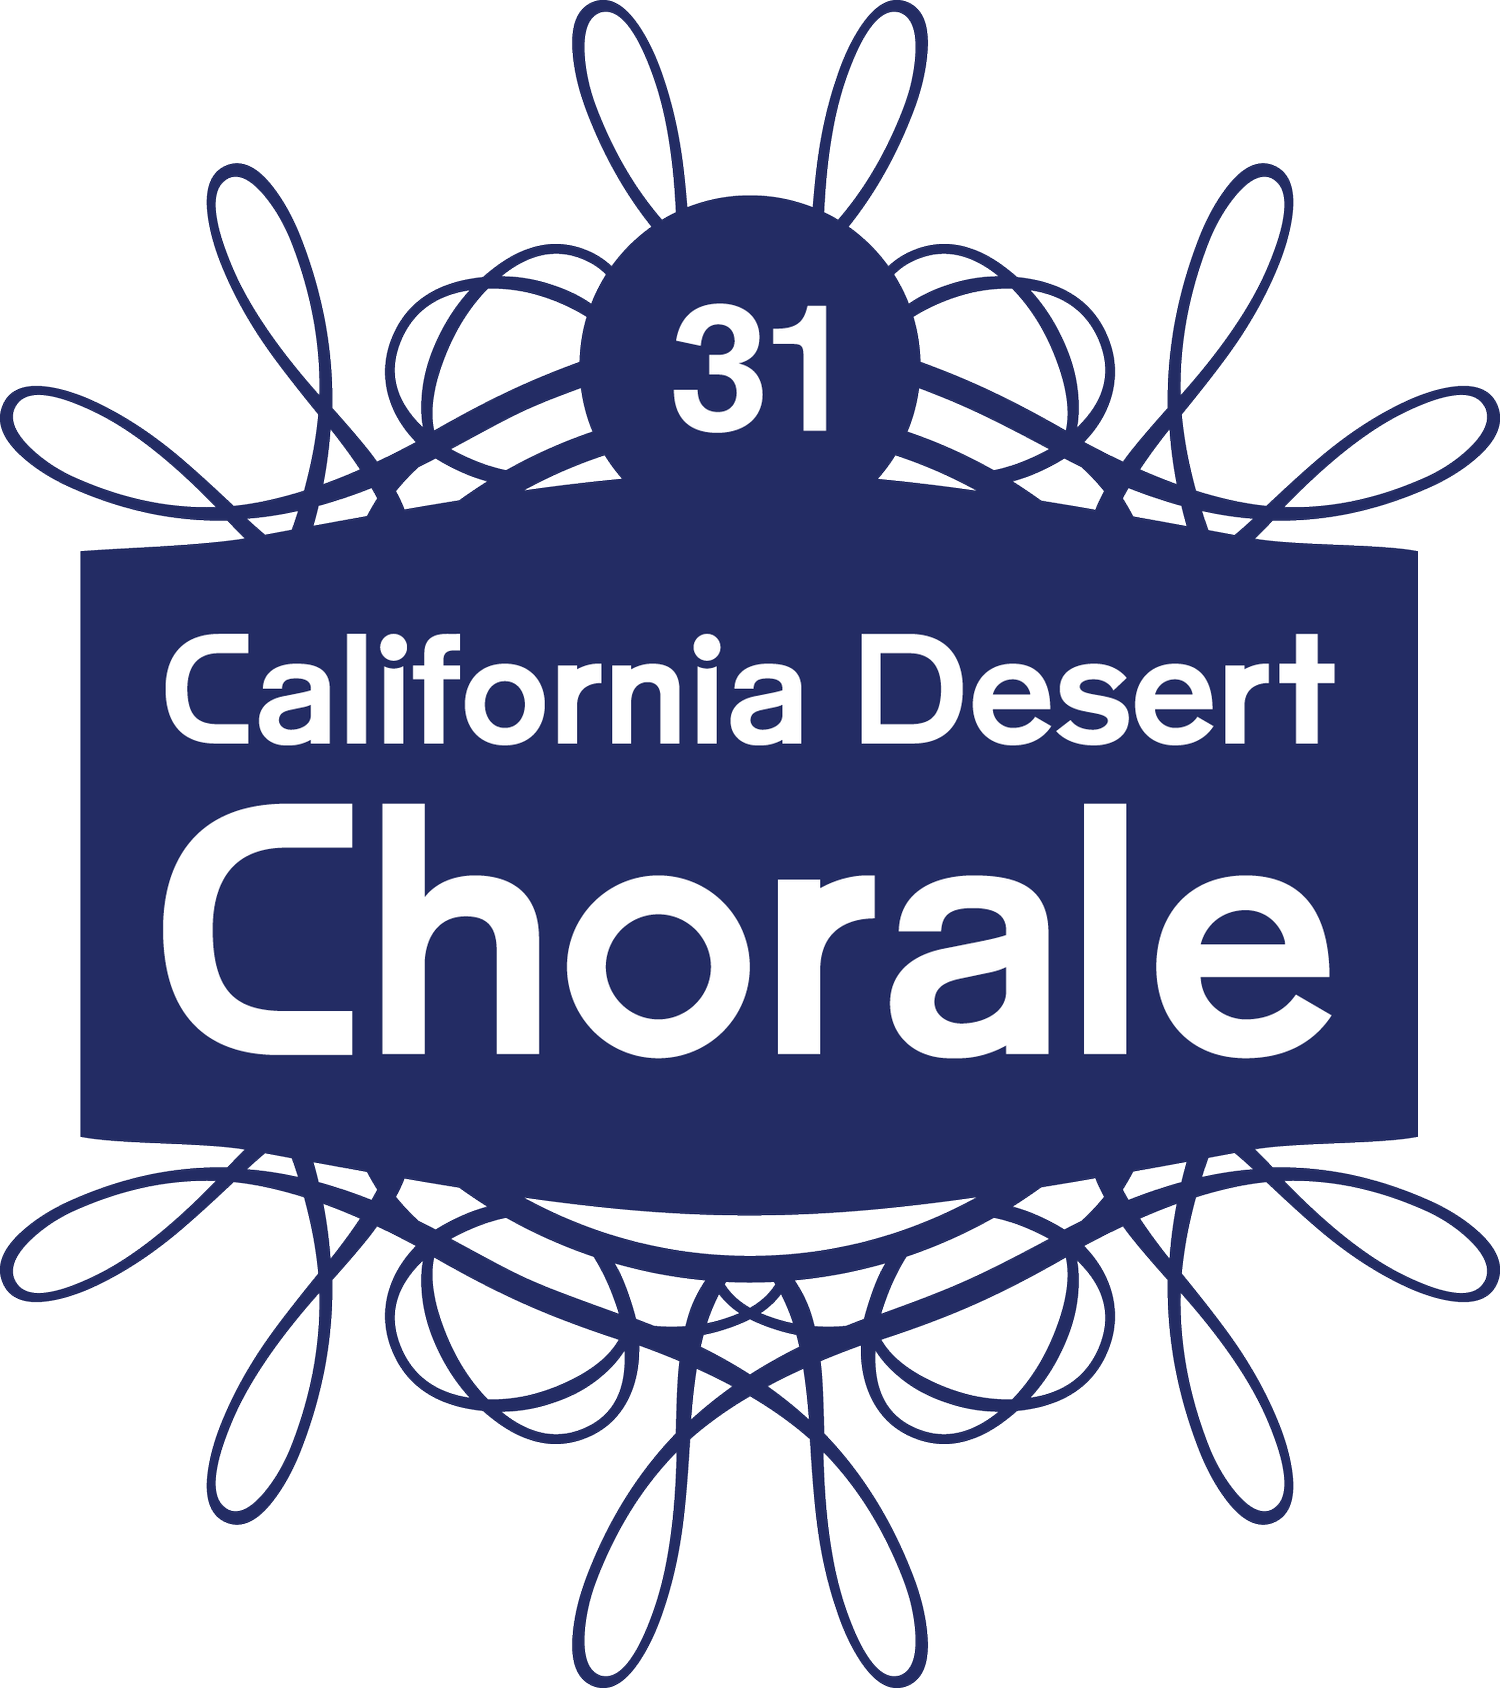 California Desert Chorale